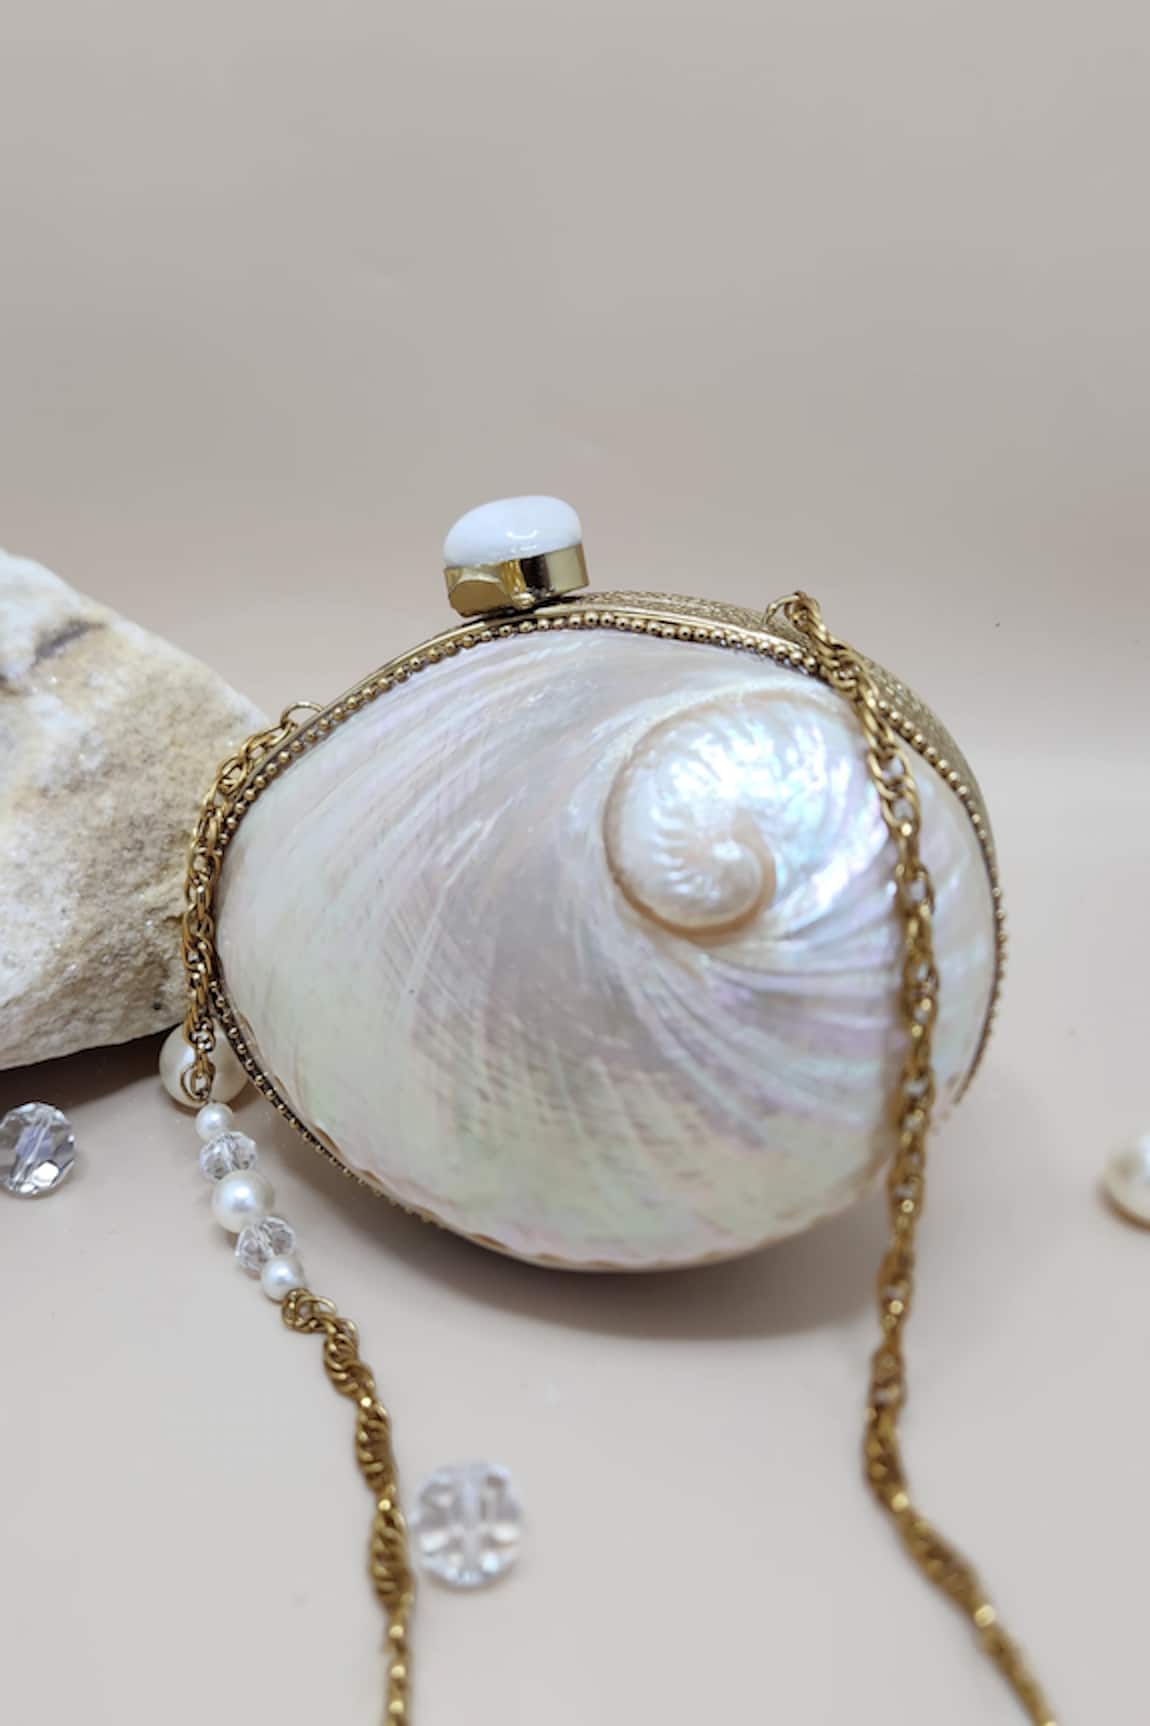 ADWITA BAGS & JEWELS Mini Abalone Shell Shaped Clutch